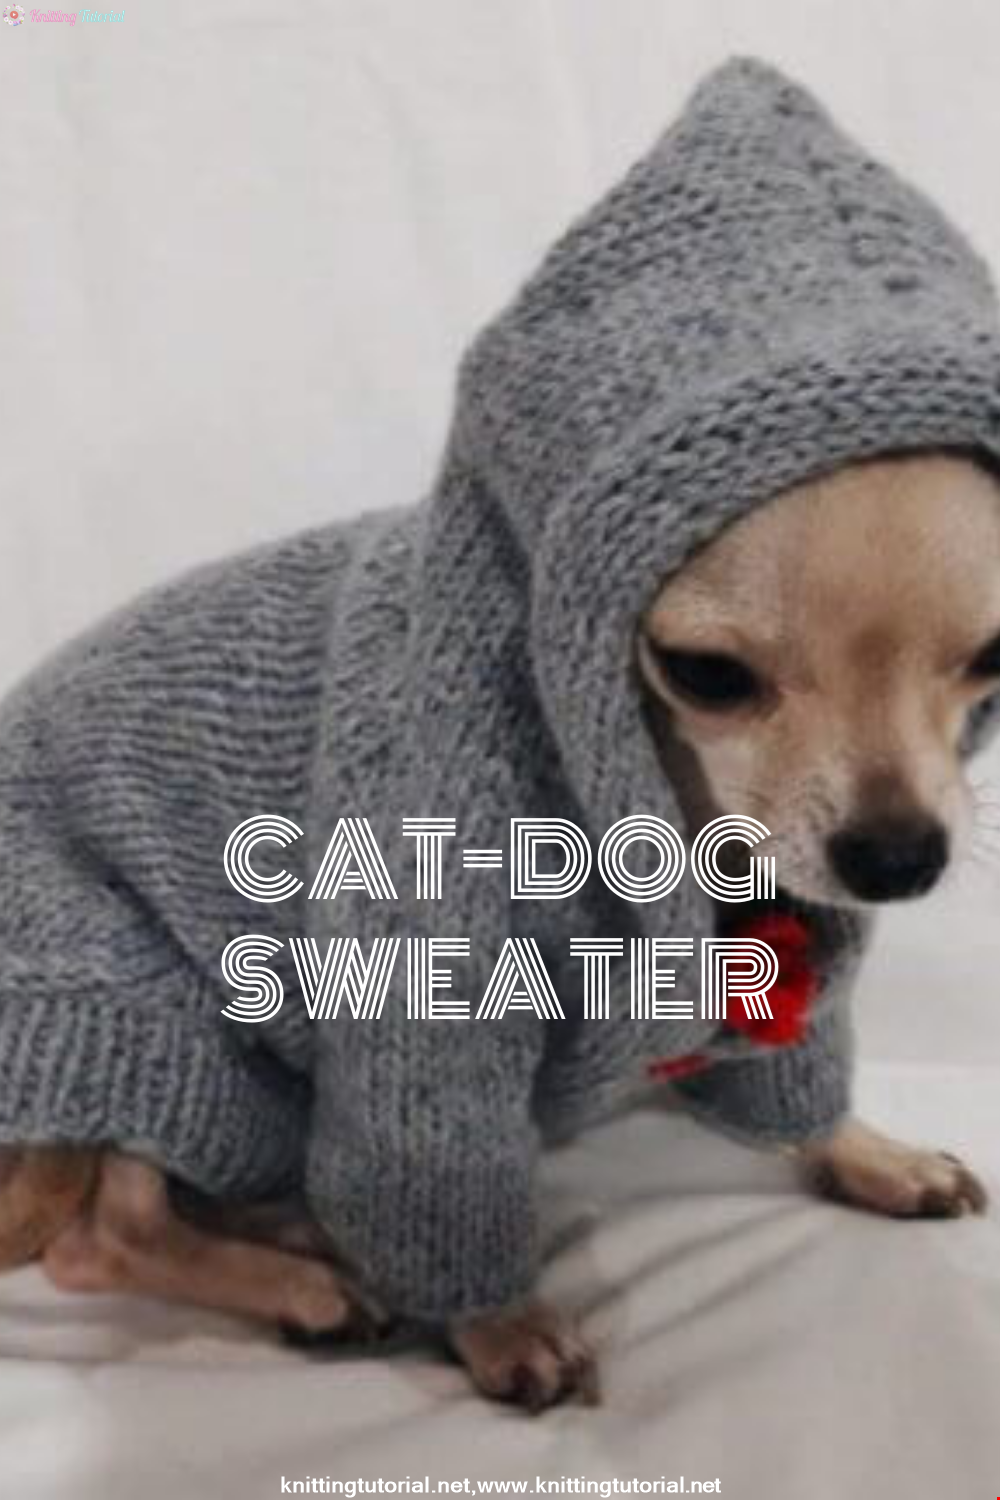 Cat-Dog Sweater Making